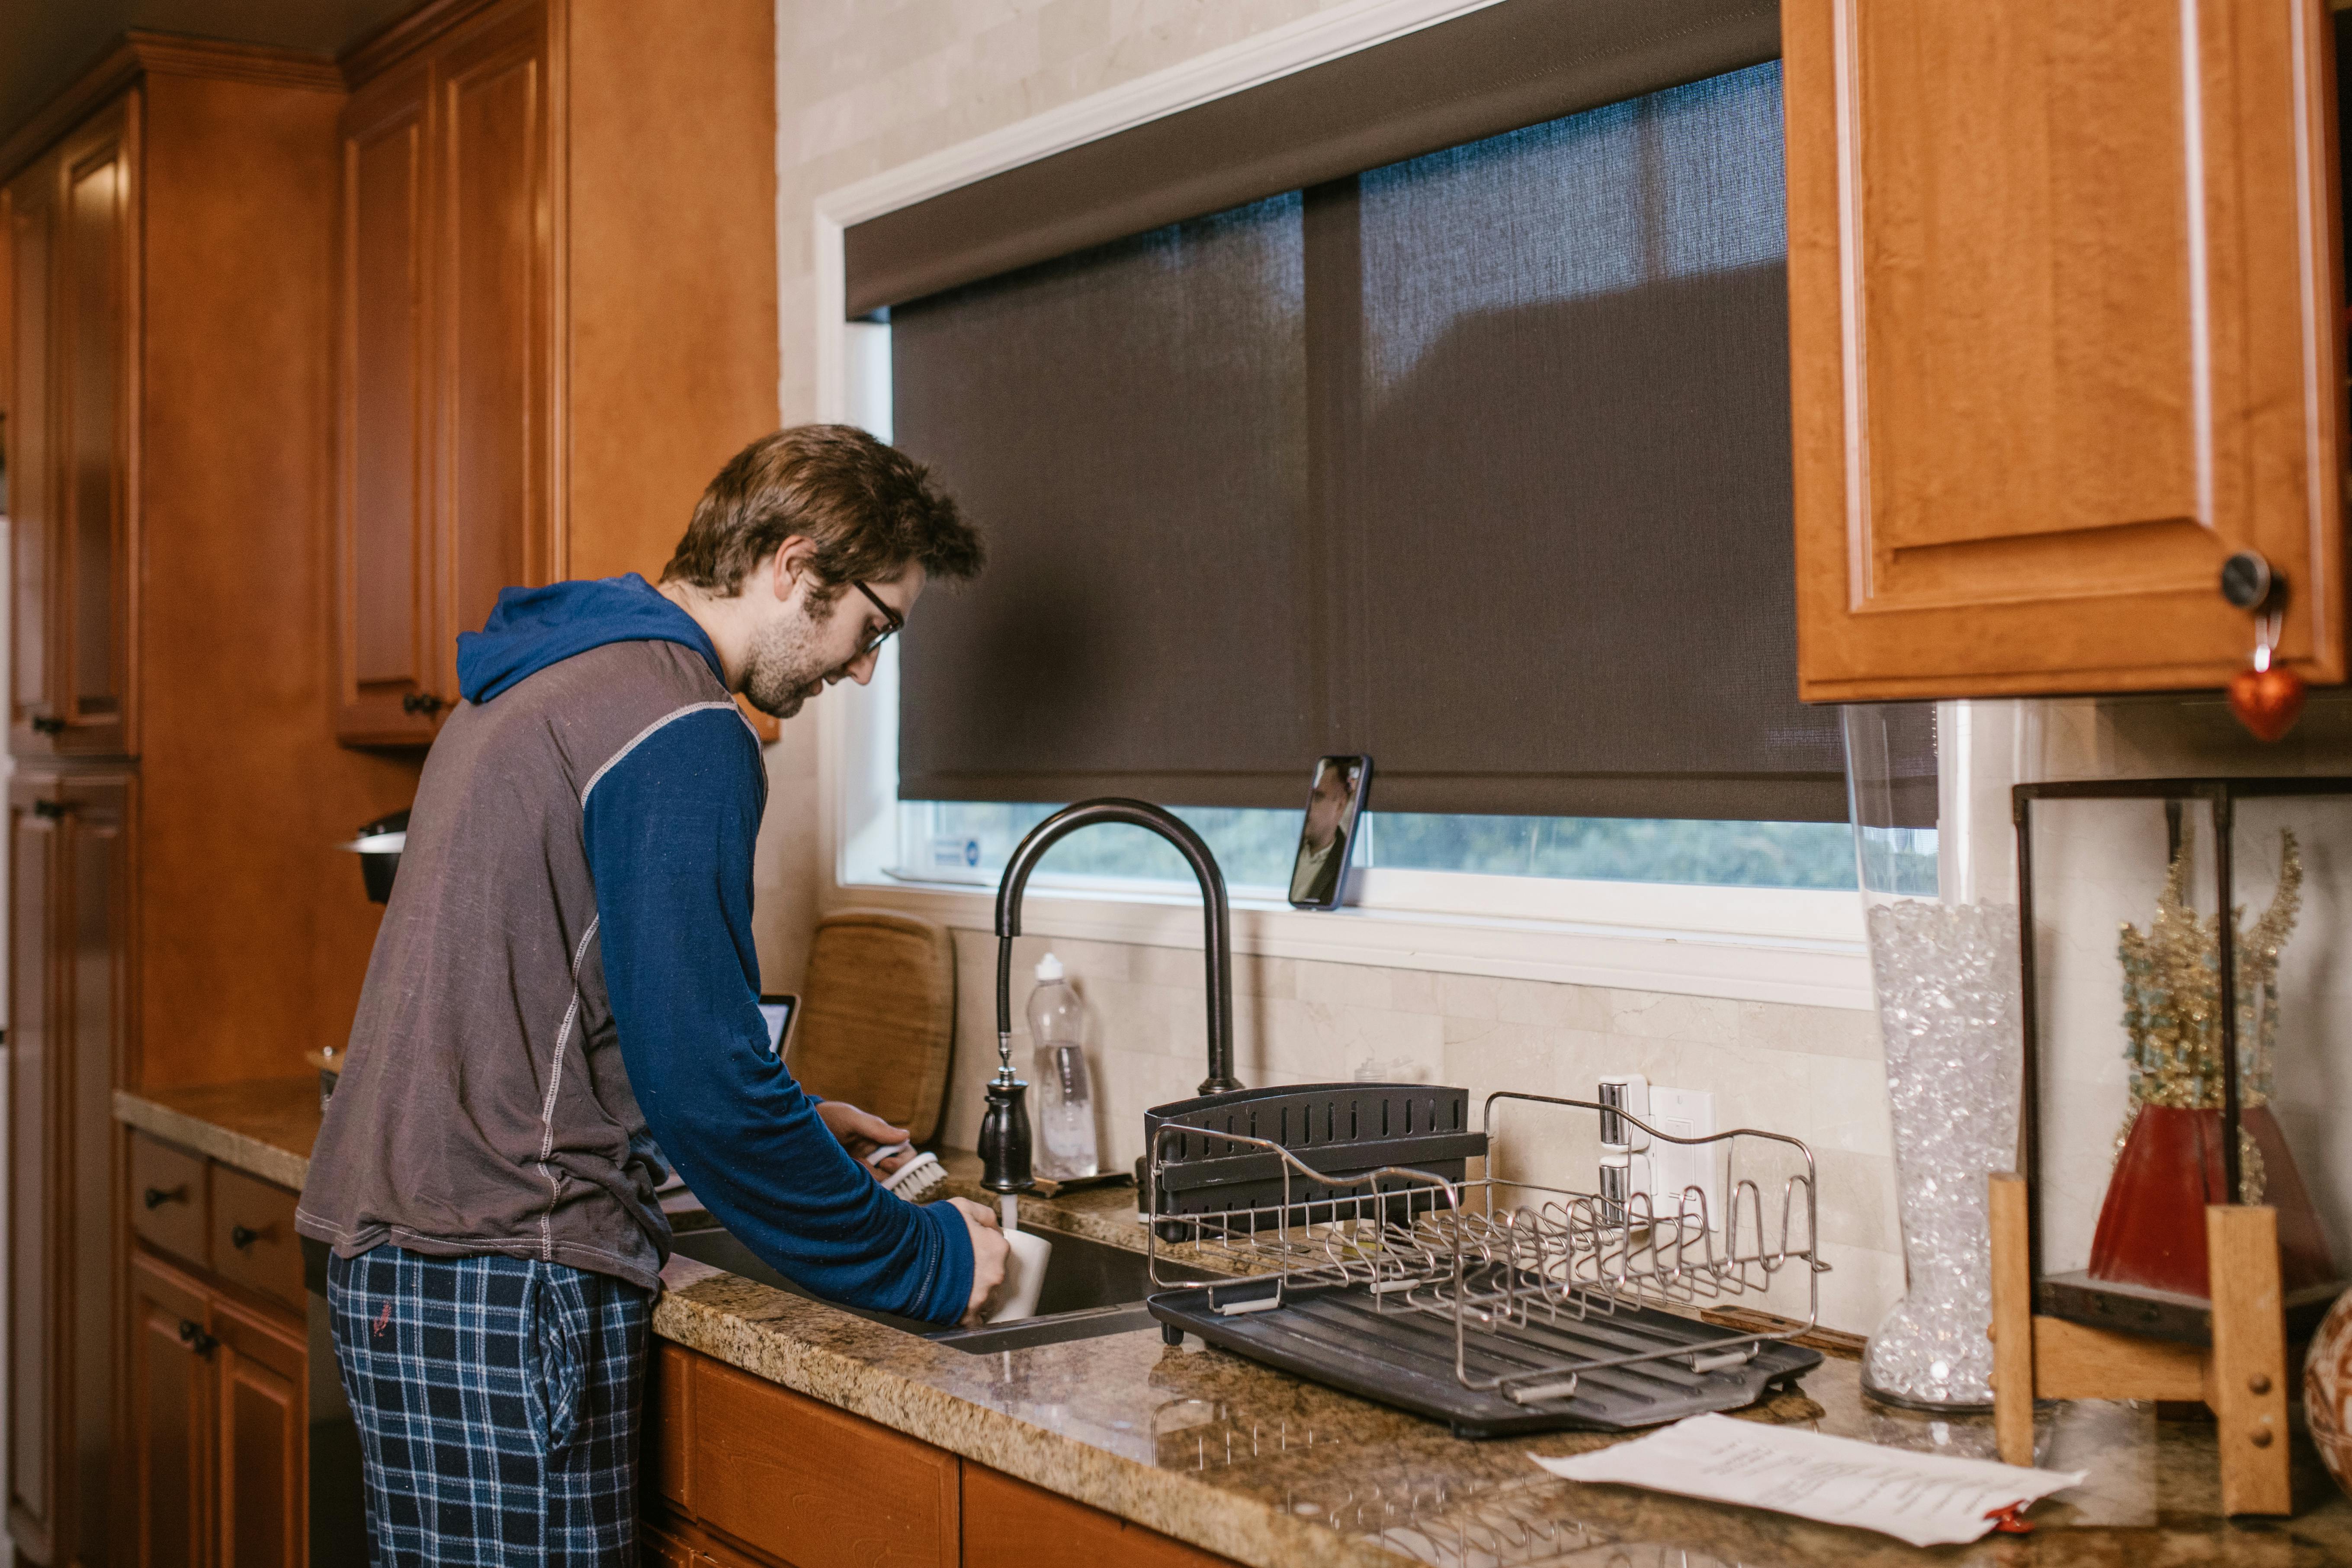 A man washing dishes | Source: Pexels